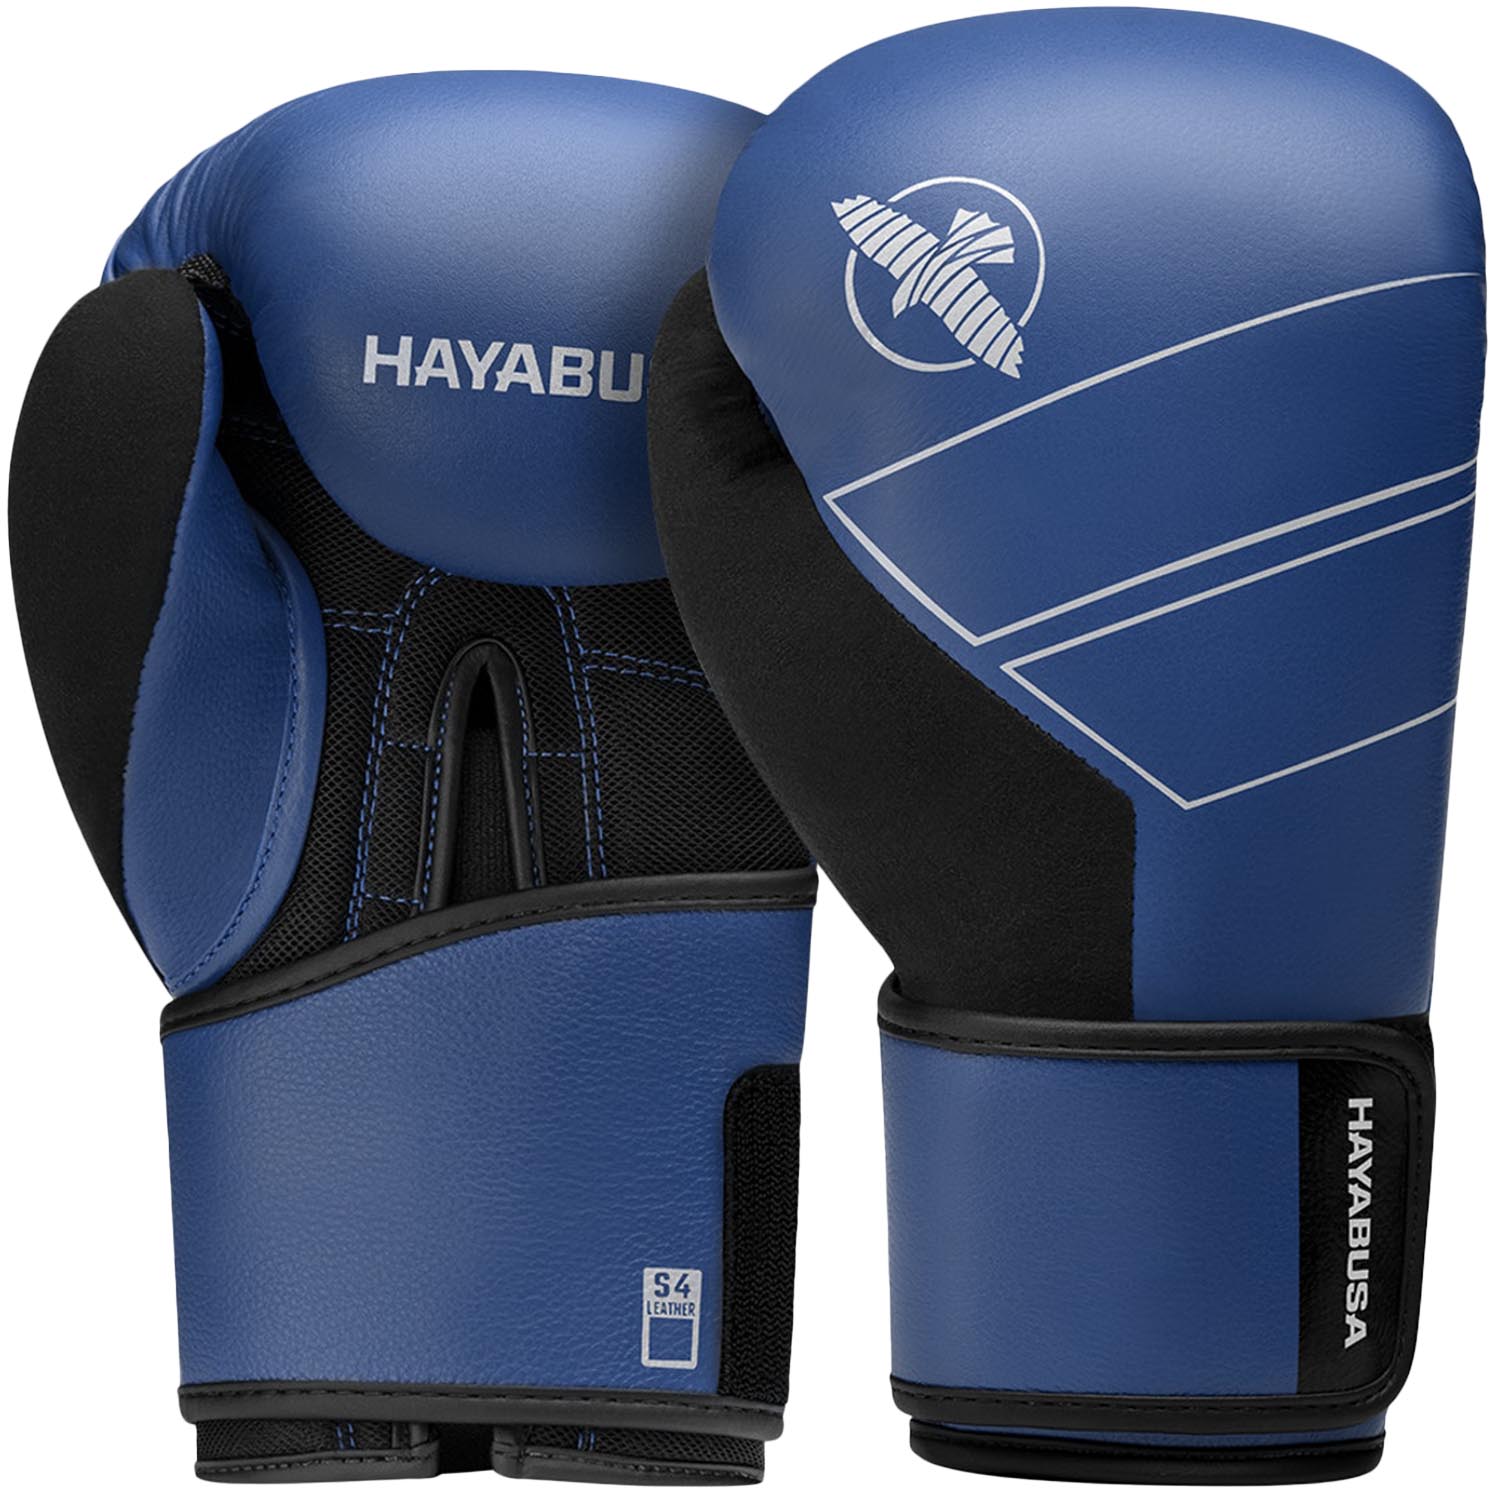 Hayabusa S4 Leather Boxing Gloves 